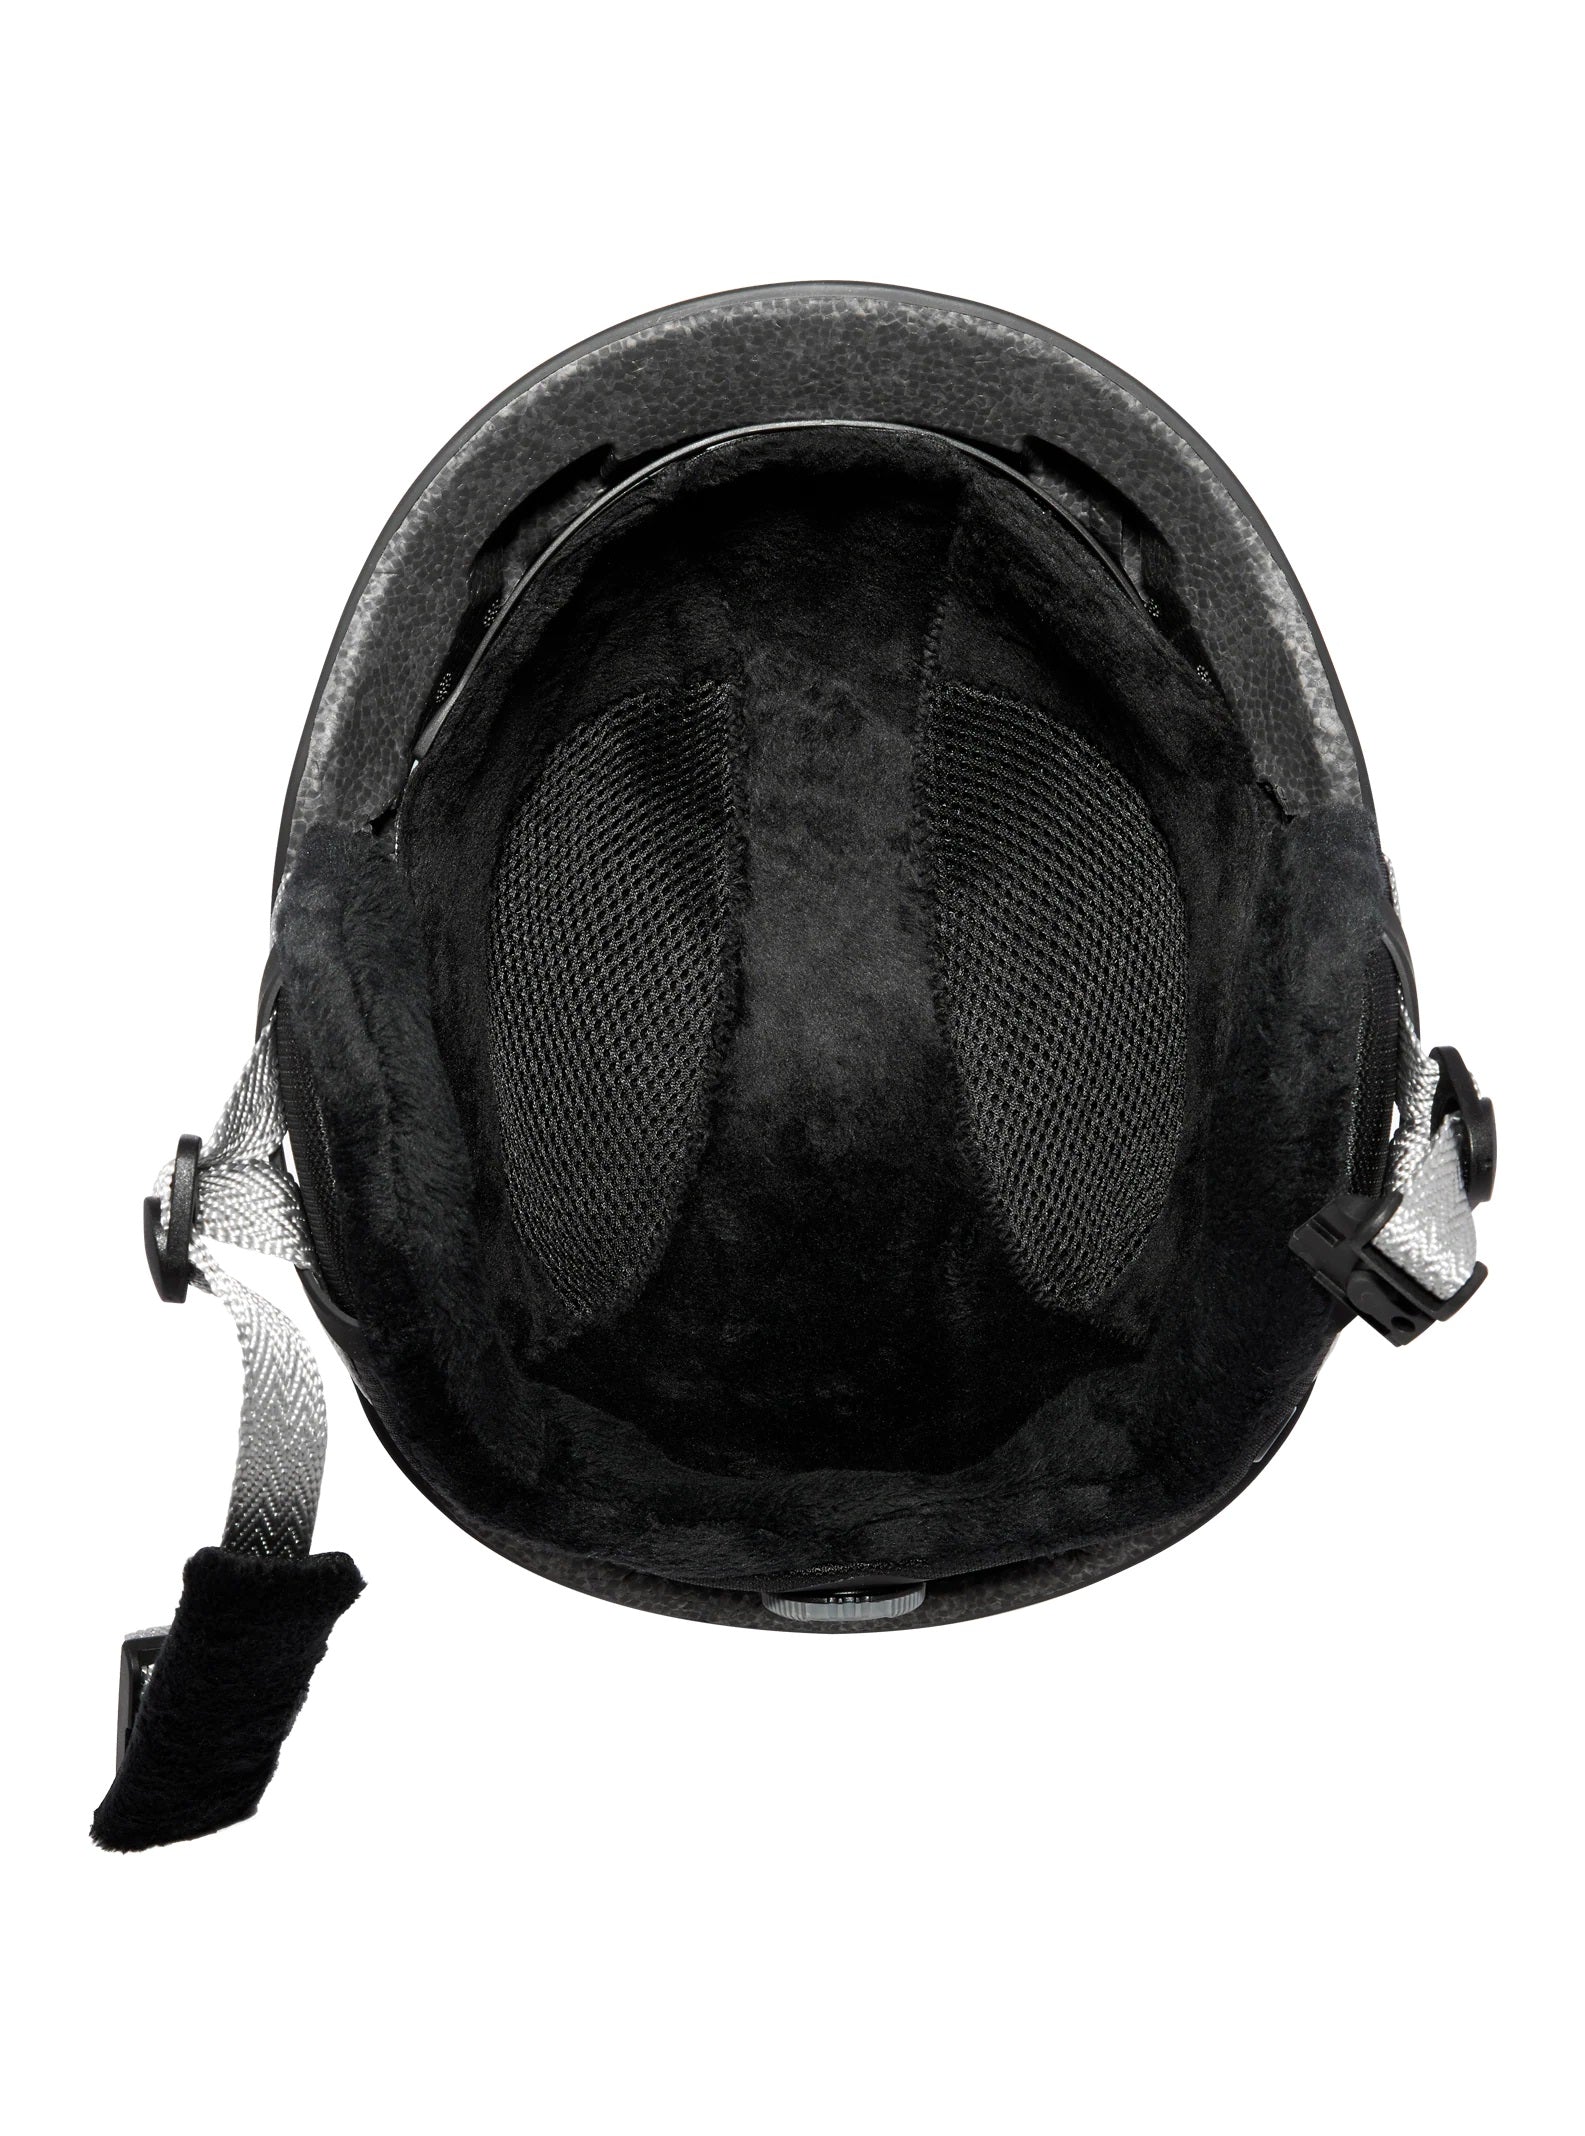 Rodan Womens Helmet